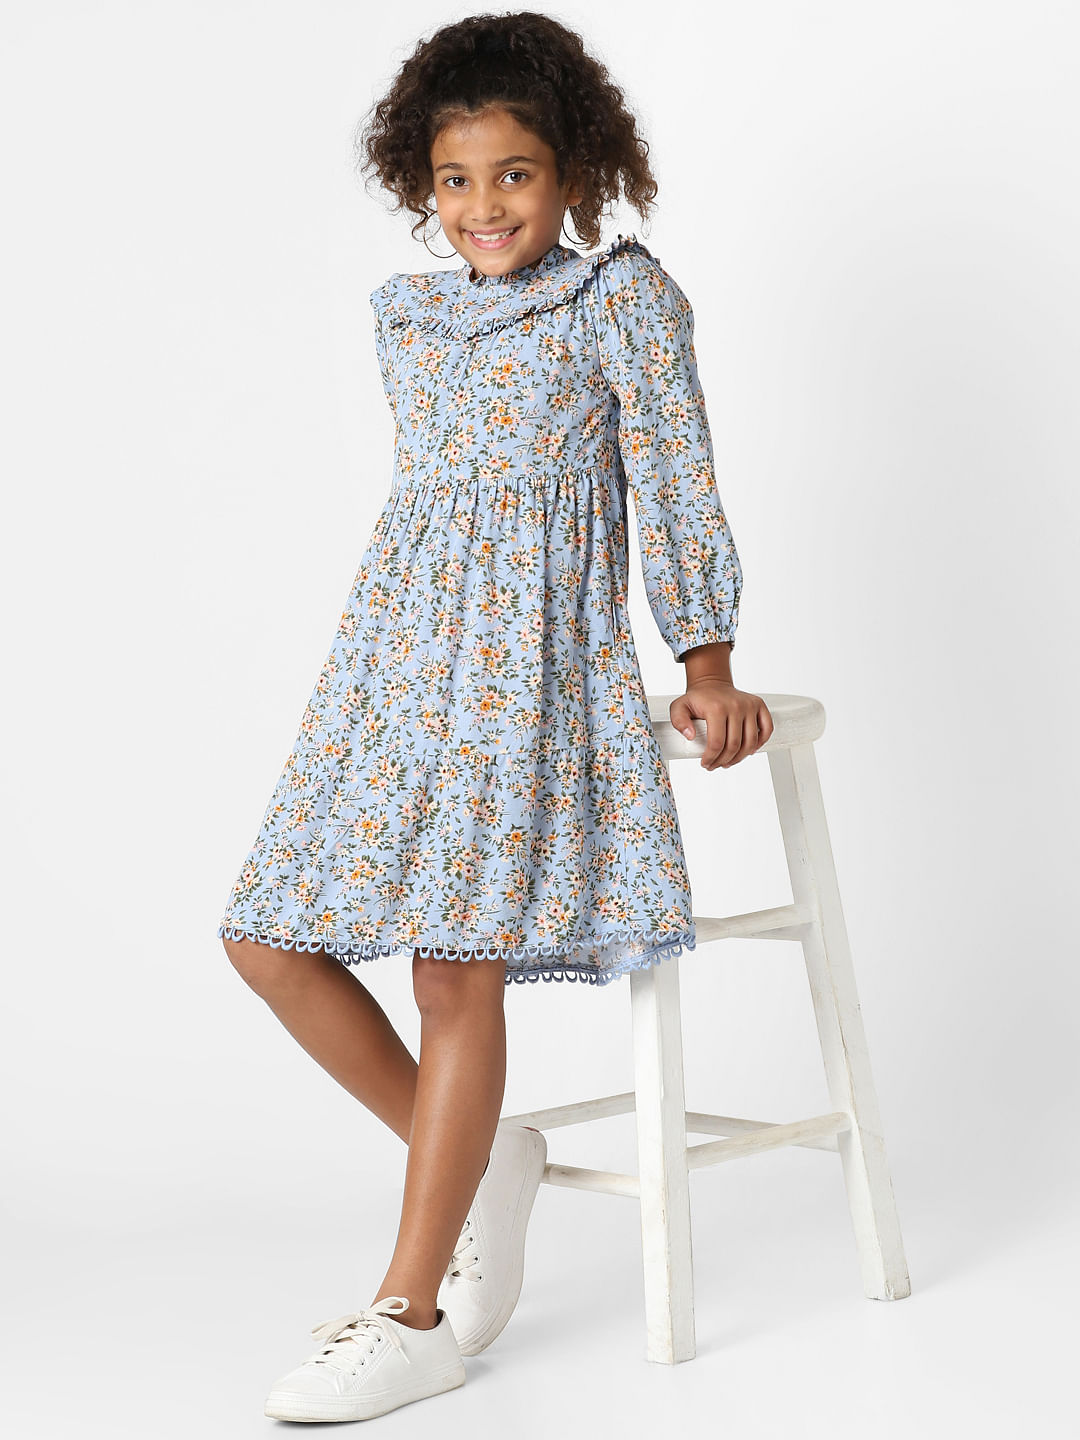 Nice Little Girl Wearing White Dress Stock Photo 132308759 | Shutterstock